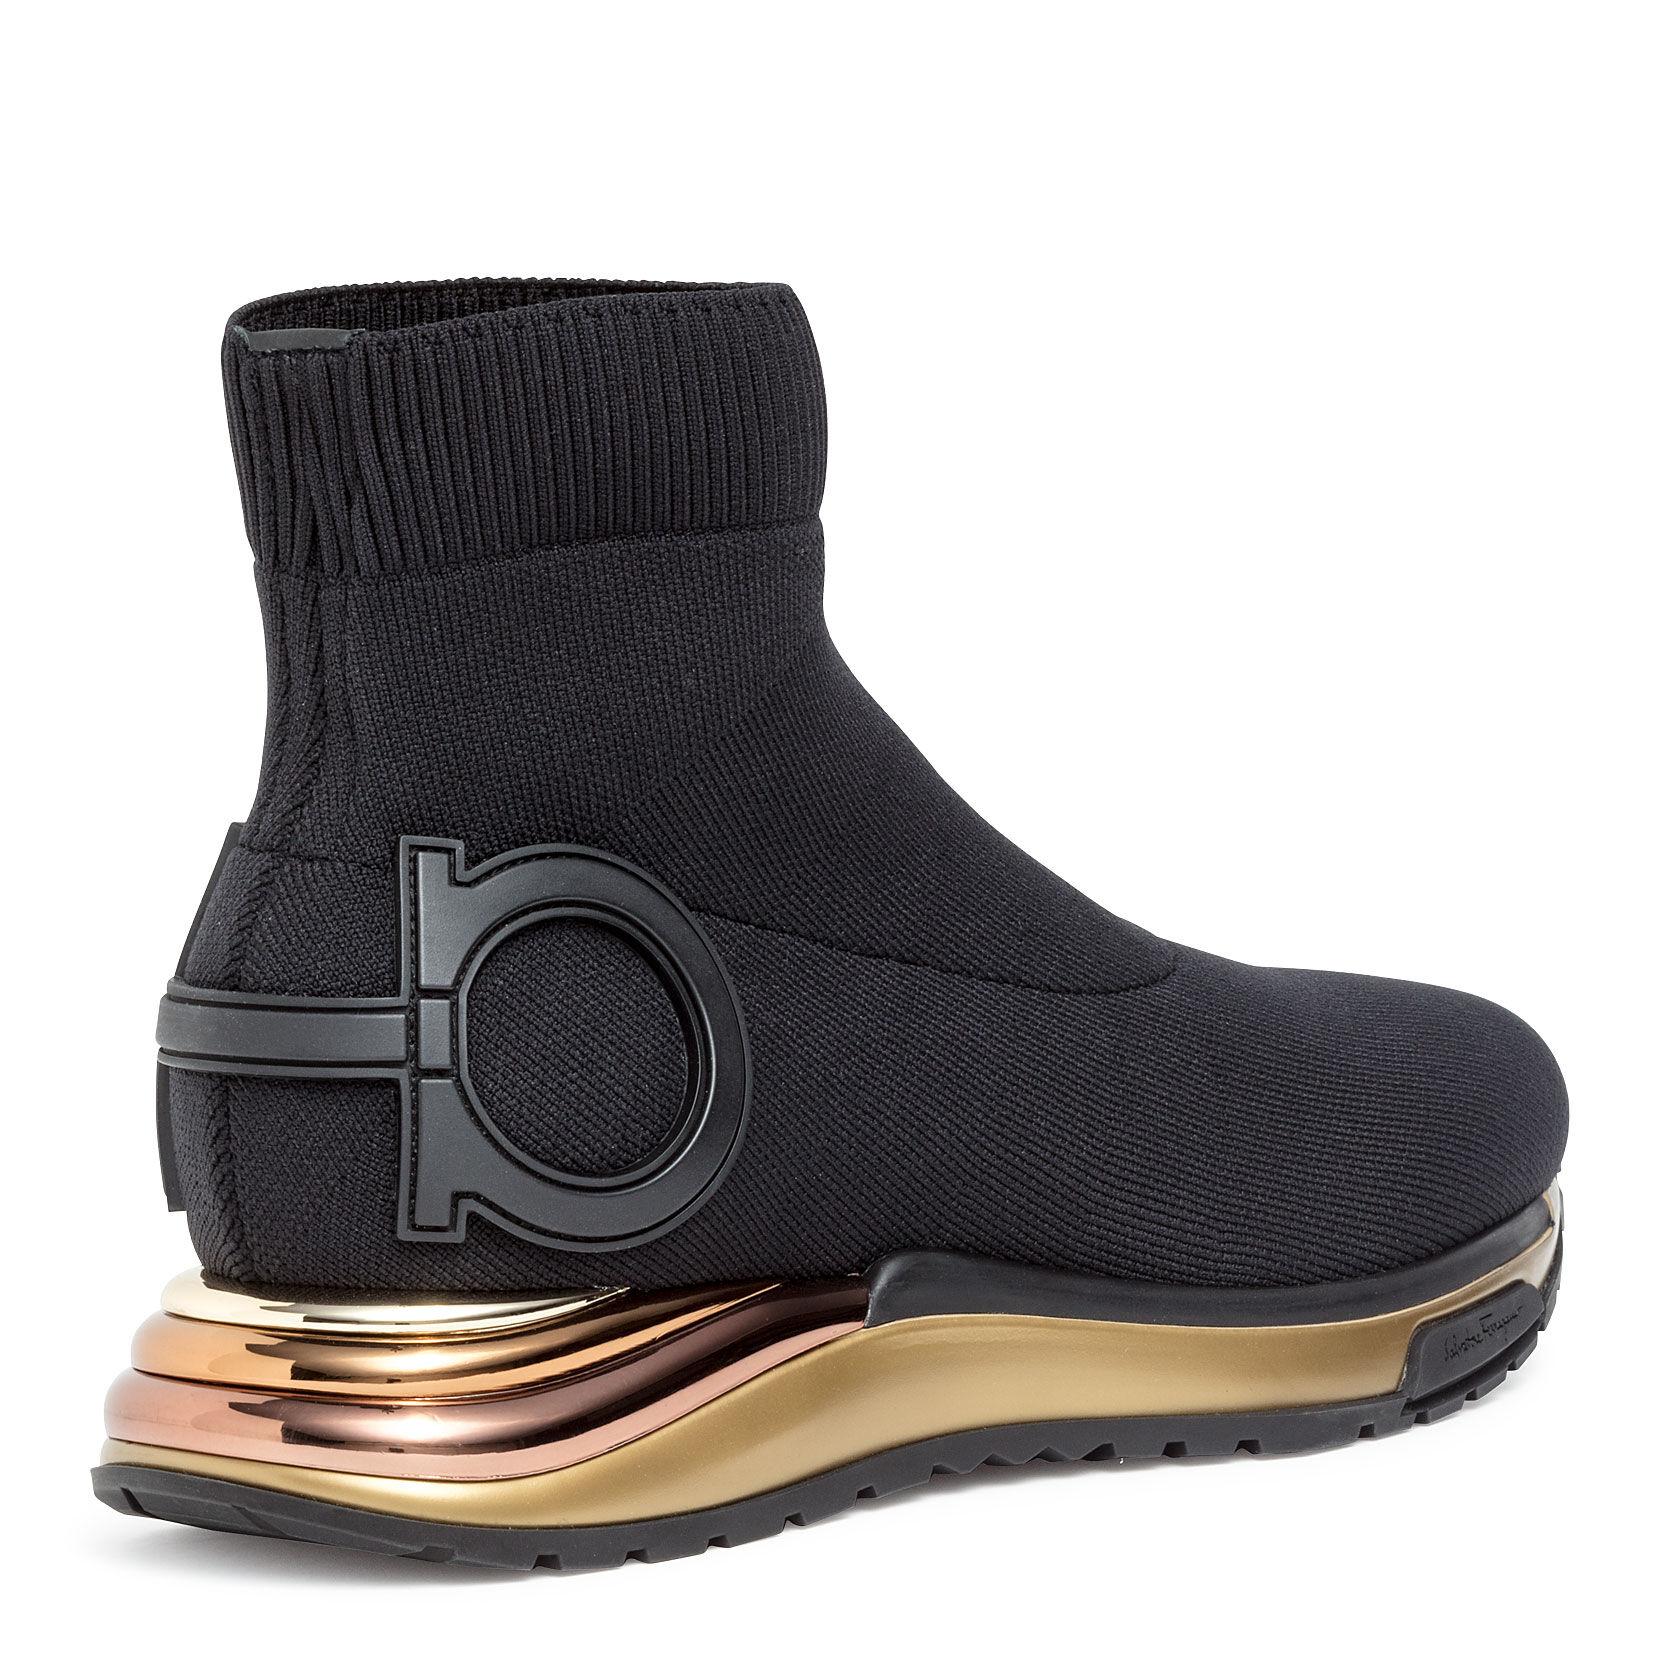 Ferragamo Leather Gancini Sneaker in Black - Save 54% - Lyst